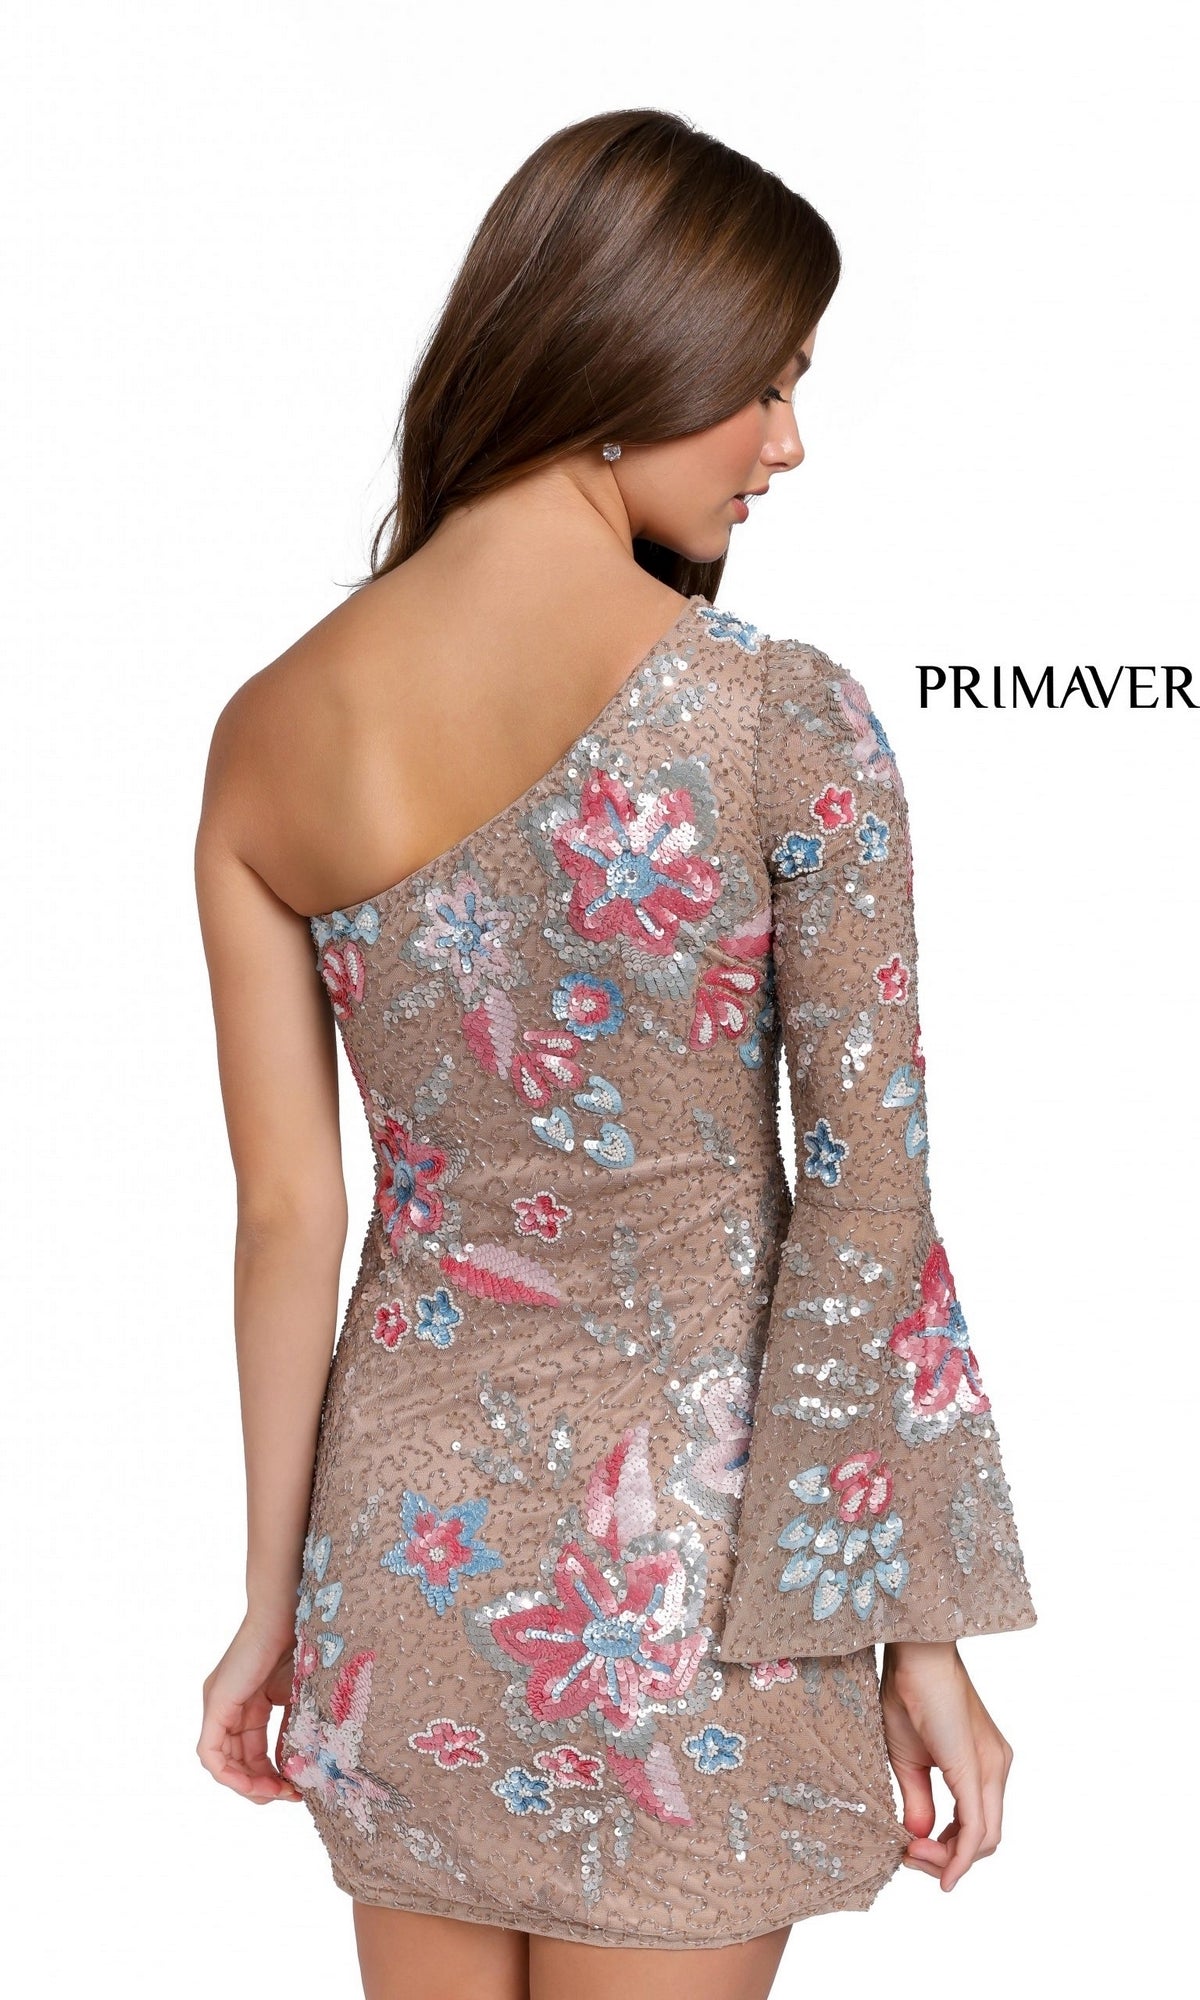  Short Homecoming Dress by Primavera 3810